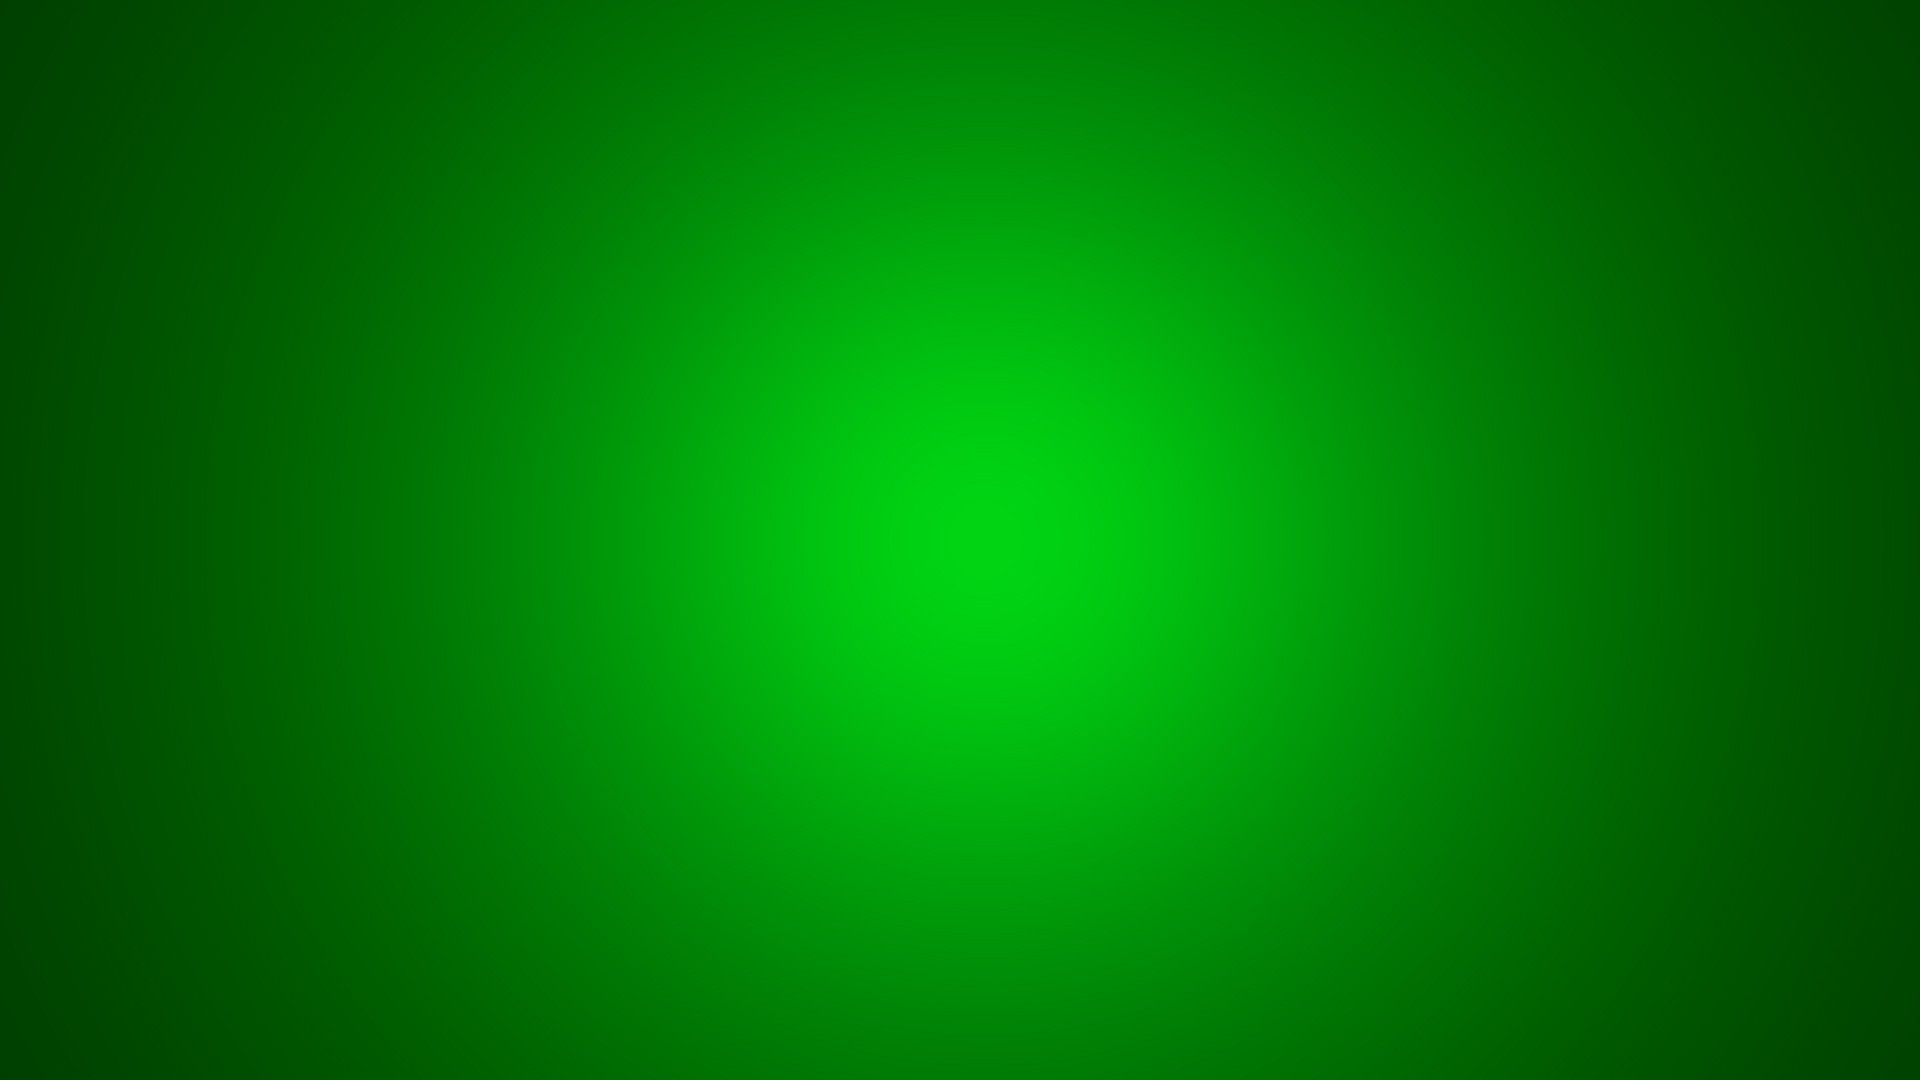 Green Background 03 - [1920x1080]